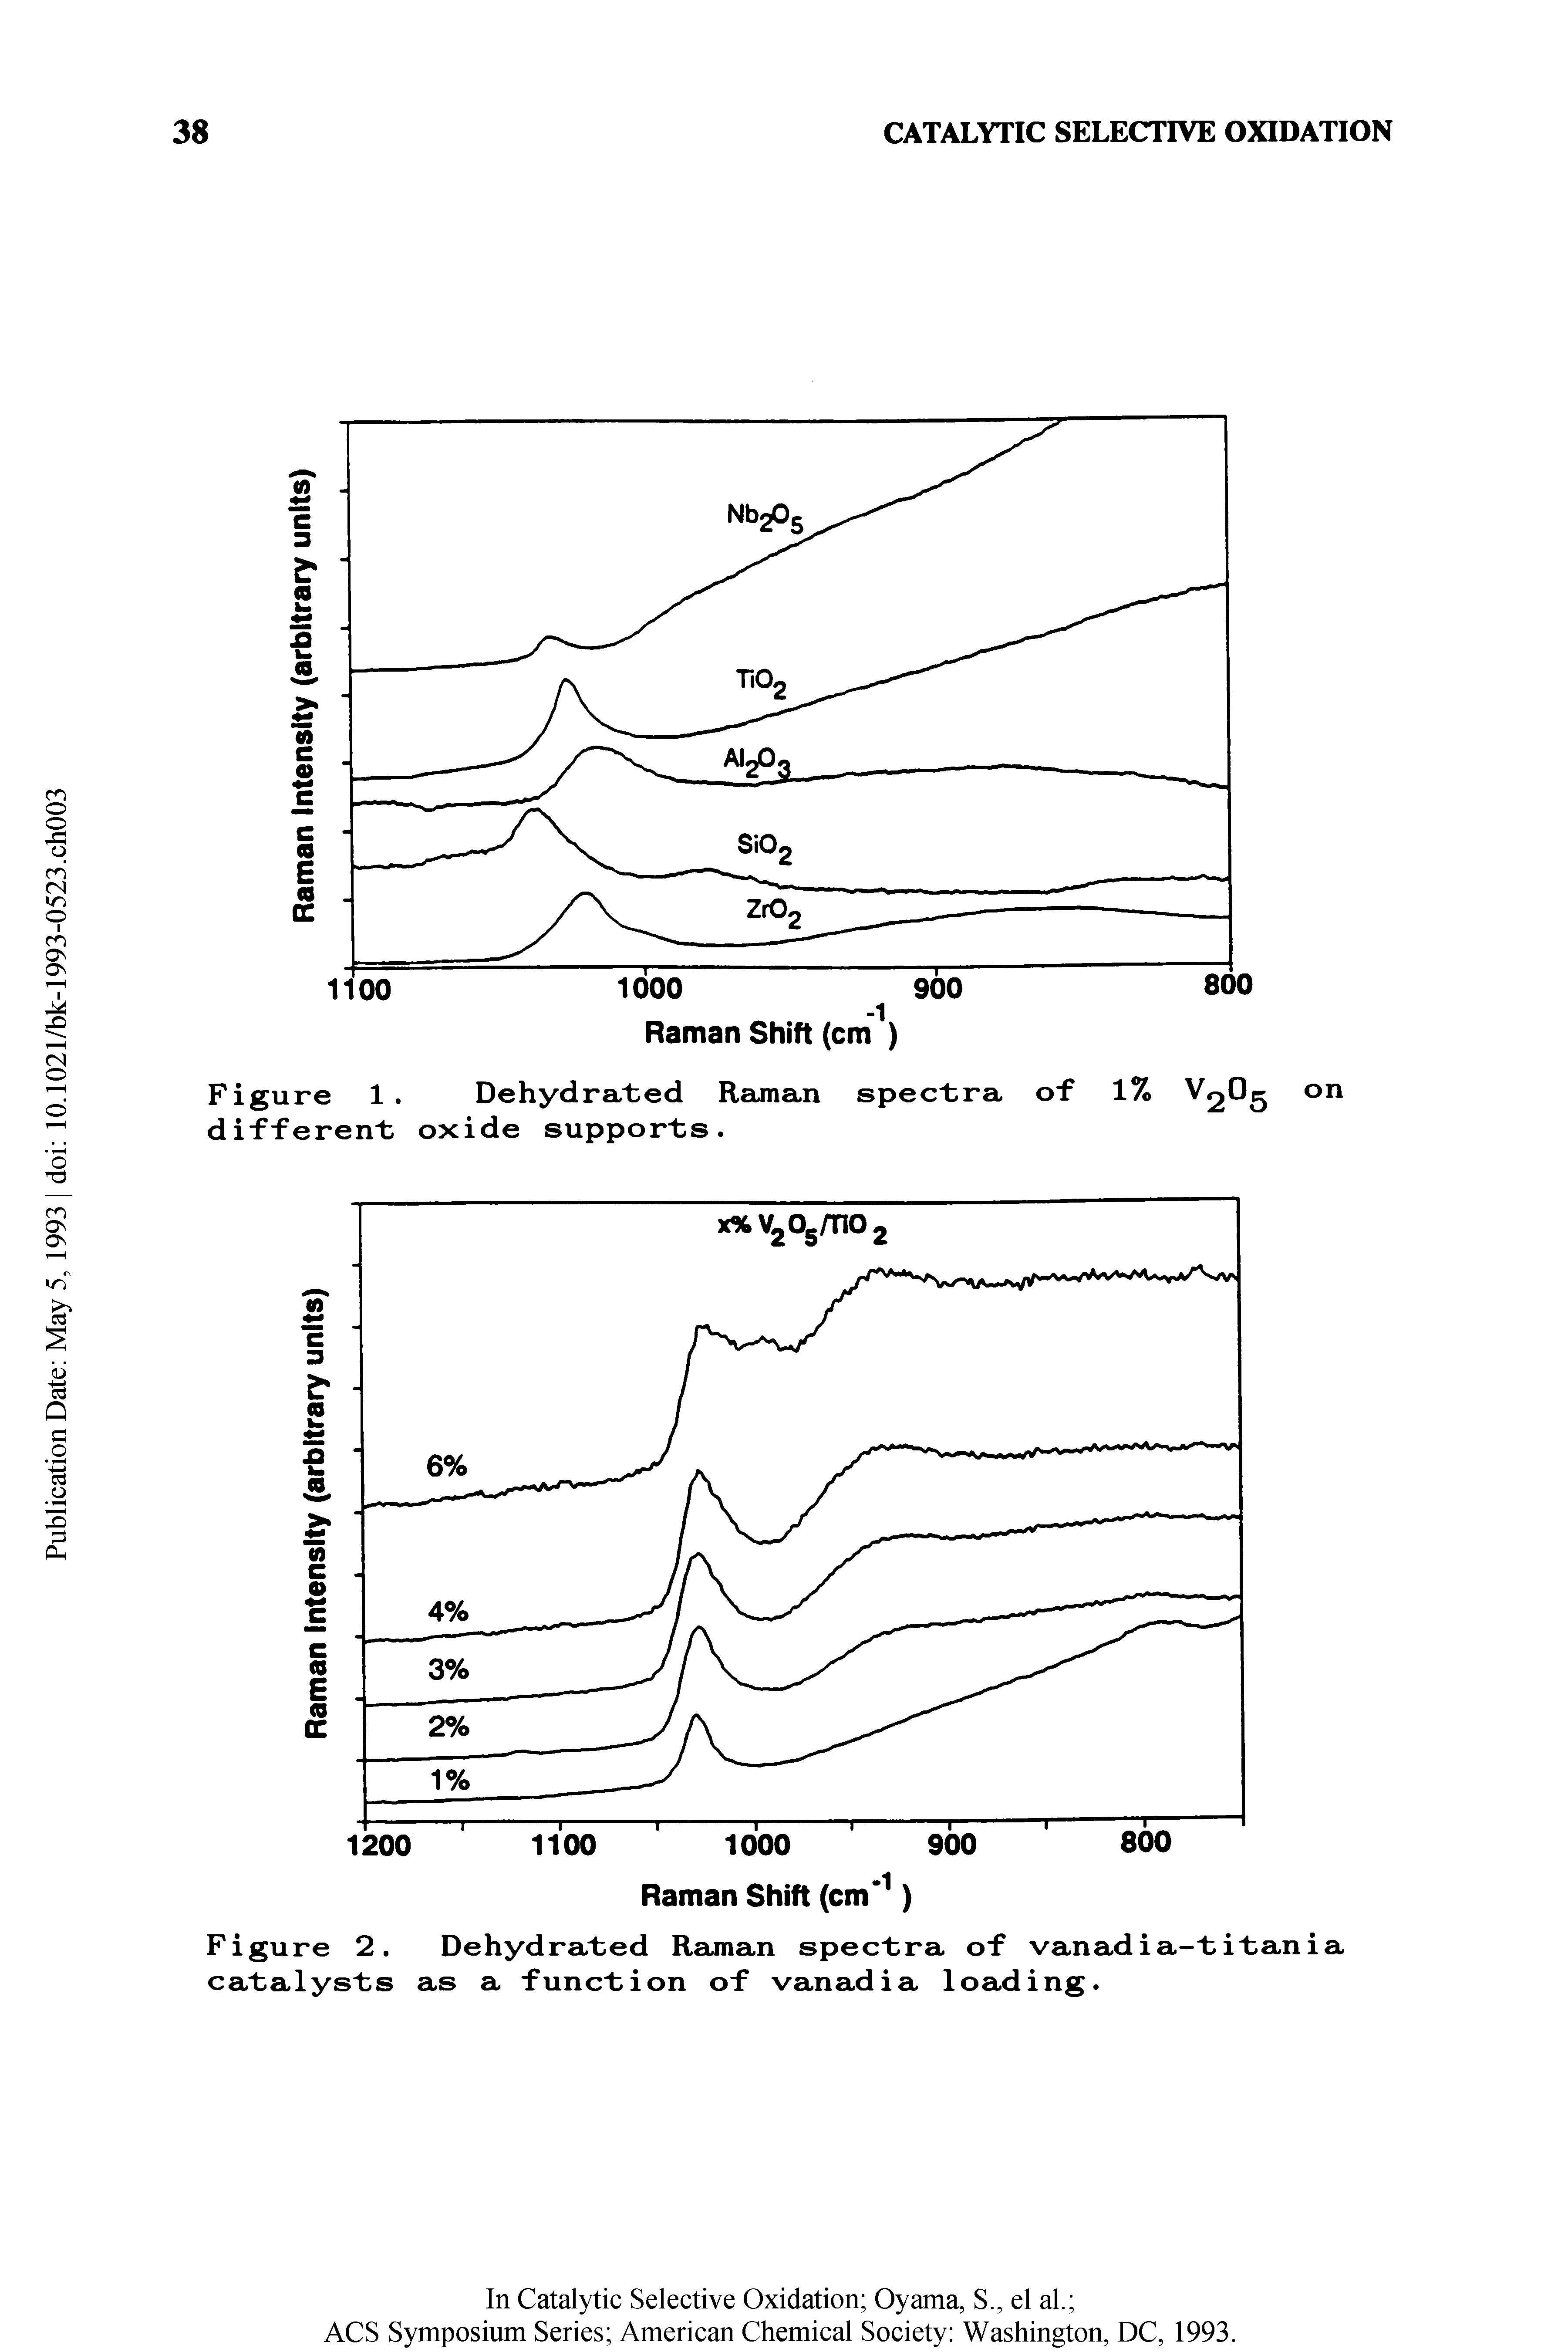 Figure 2. Dehydrated Raman spectra of vanadia-titania catalysts as a function of vanadia loading.